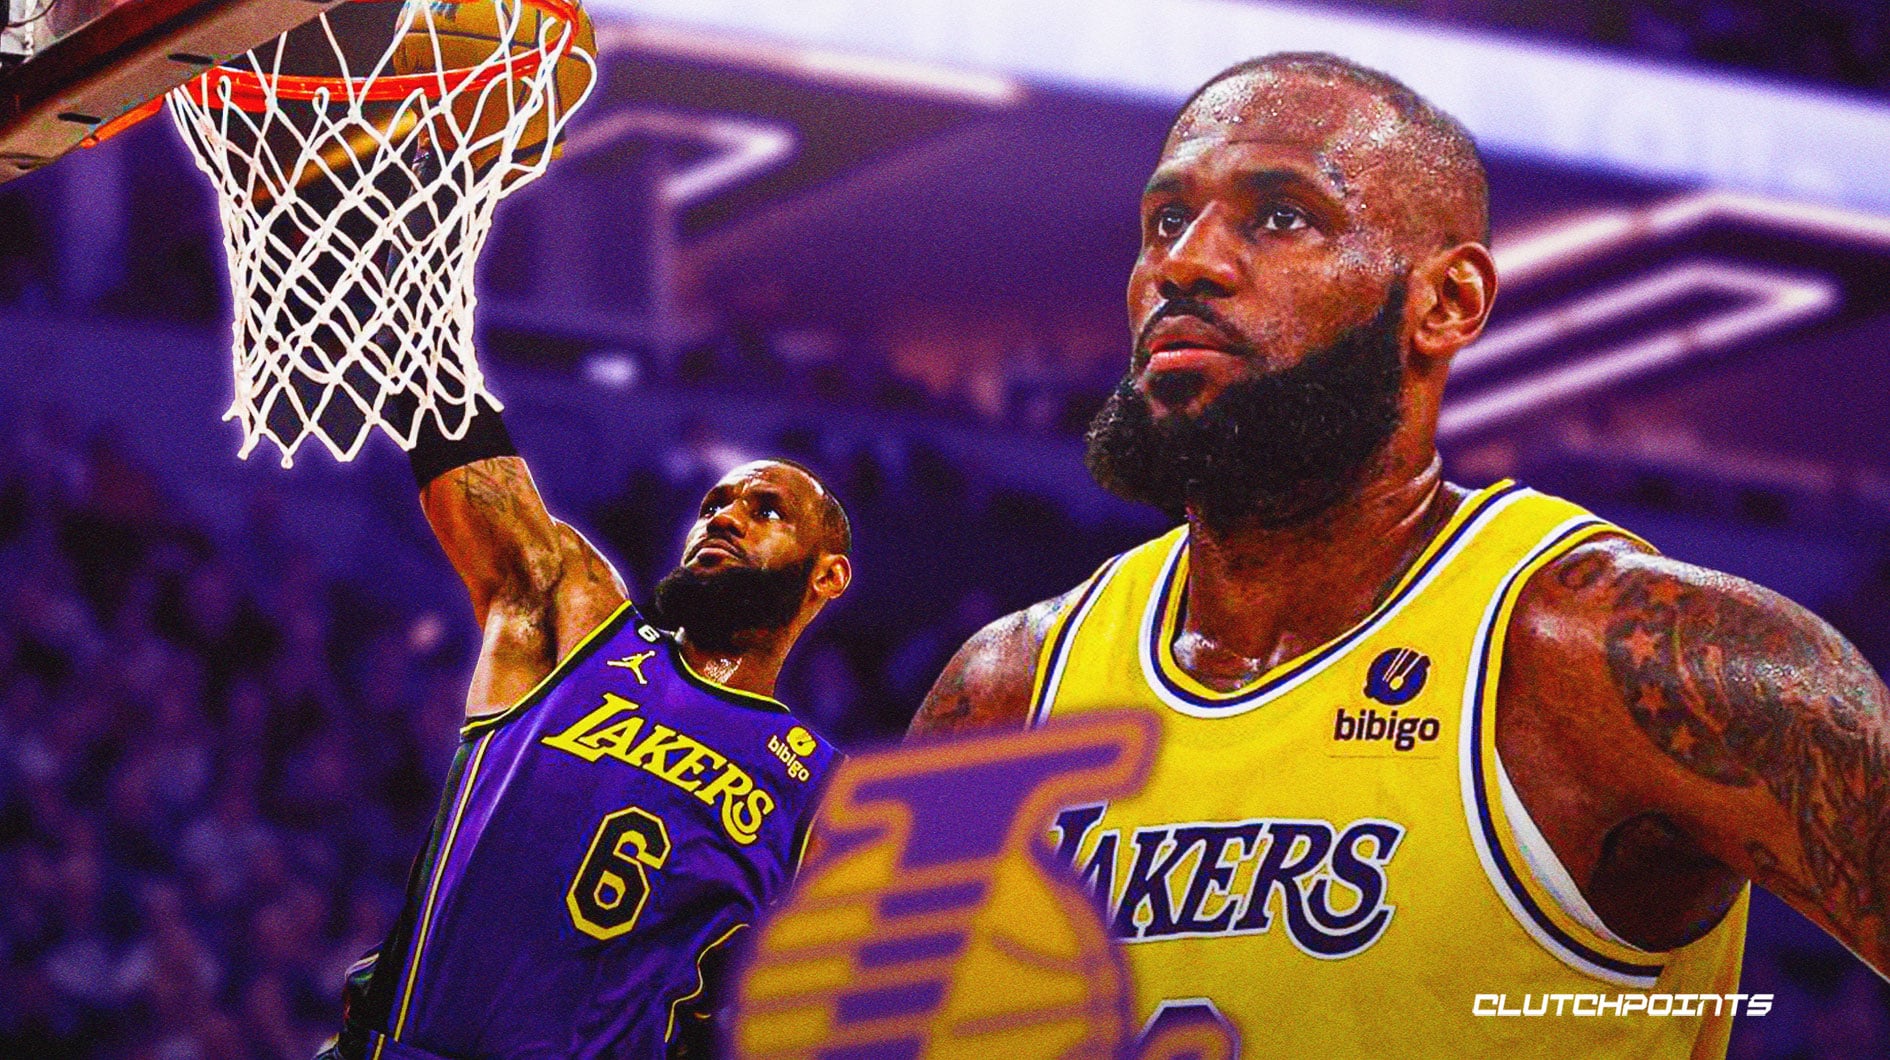 Lakers' LeBron James looks sharp in Year 21 prep